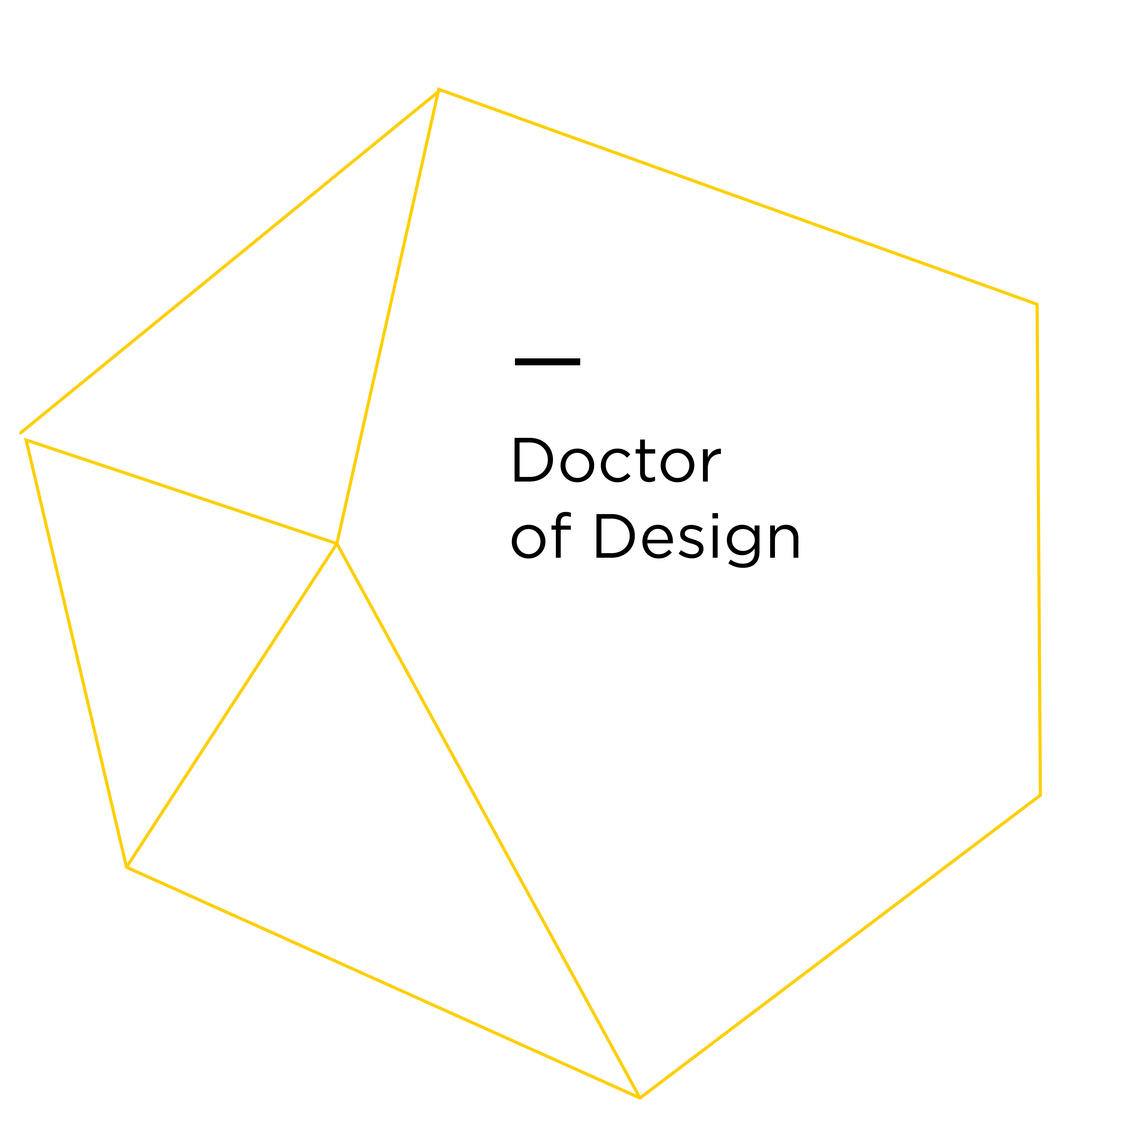 Doctor of Design